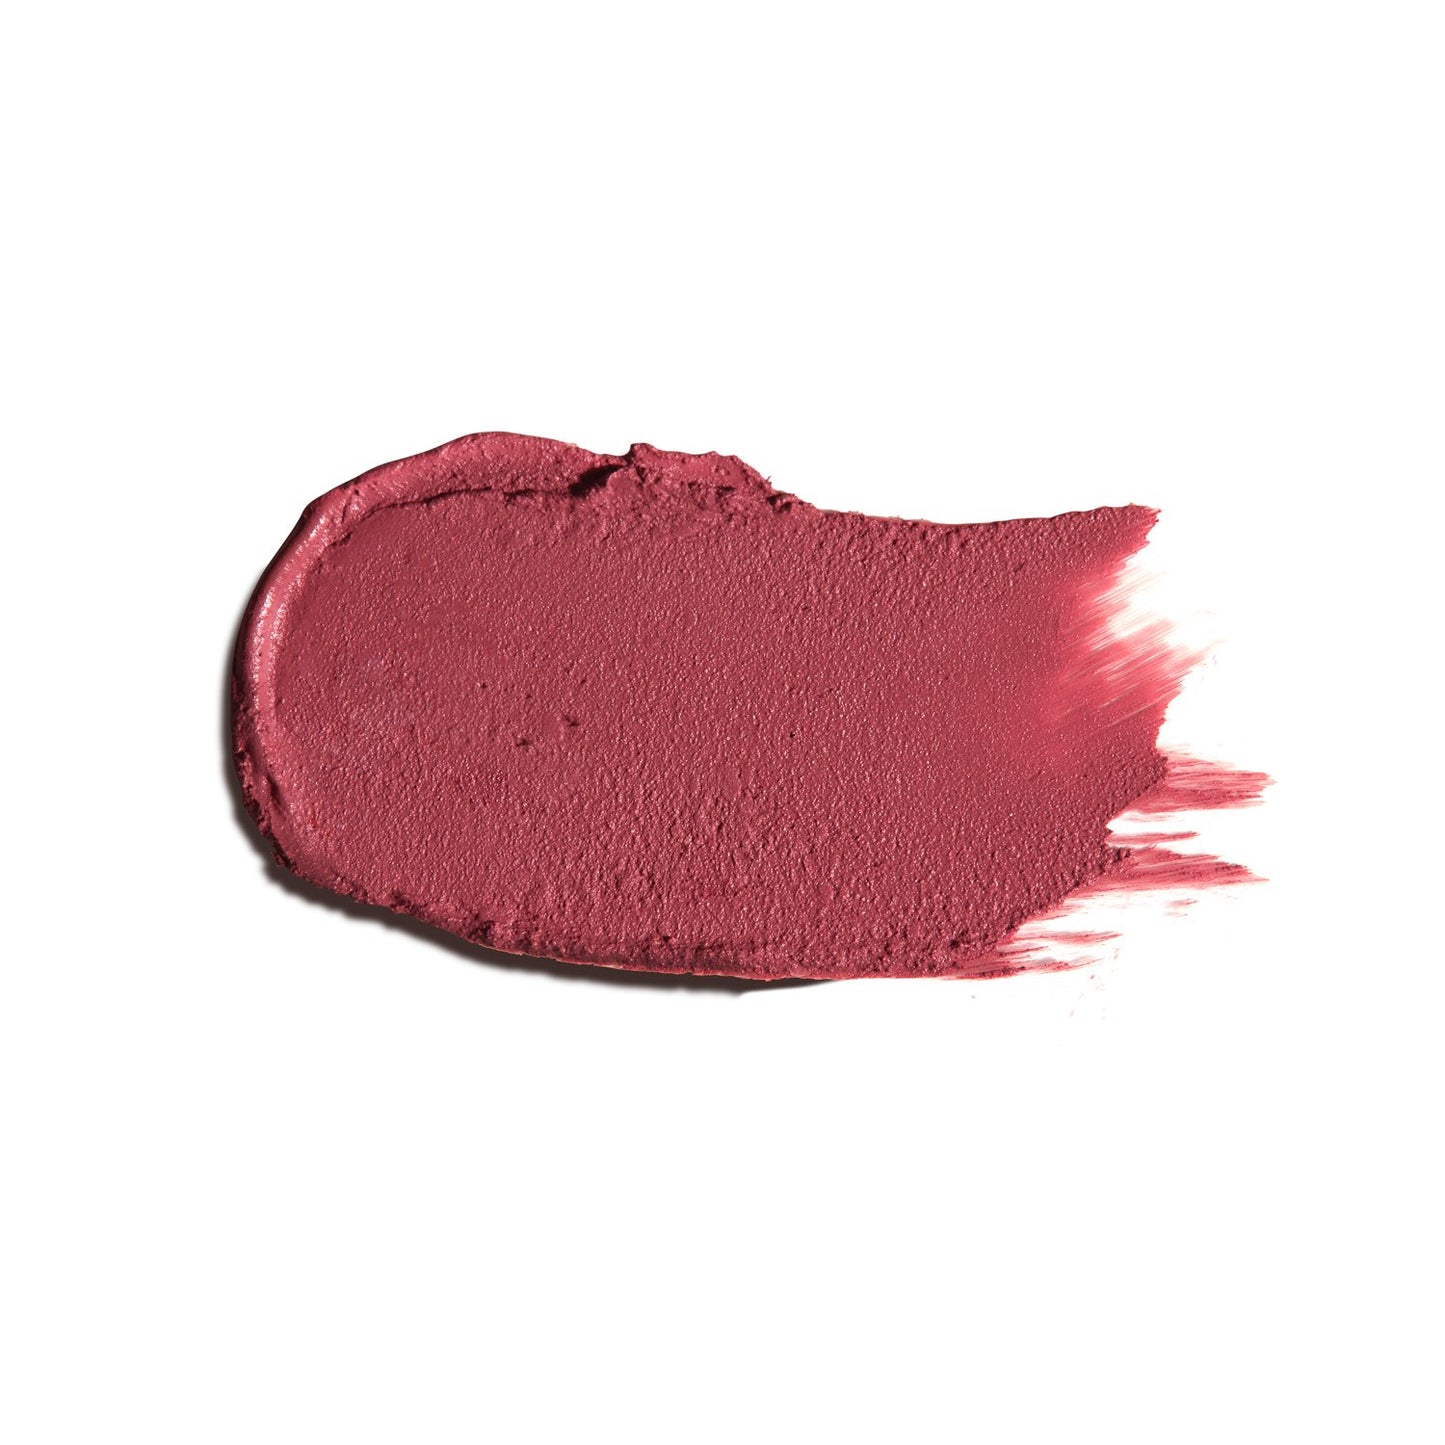 Full Bloom Sculpted Lipstick  Ogee Luxury Organic Skincare